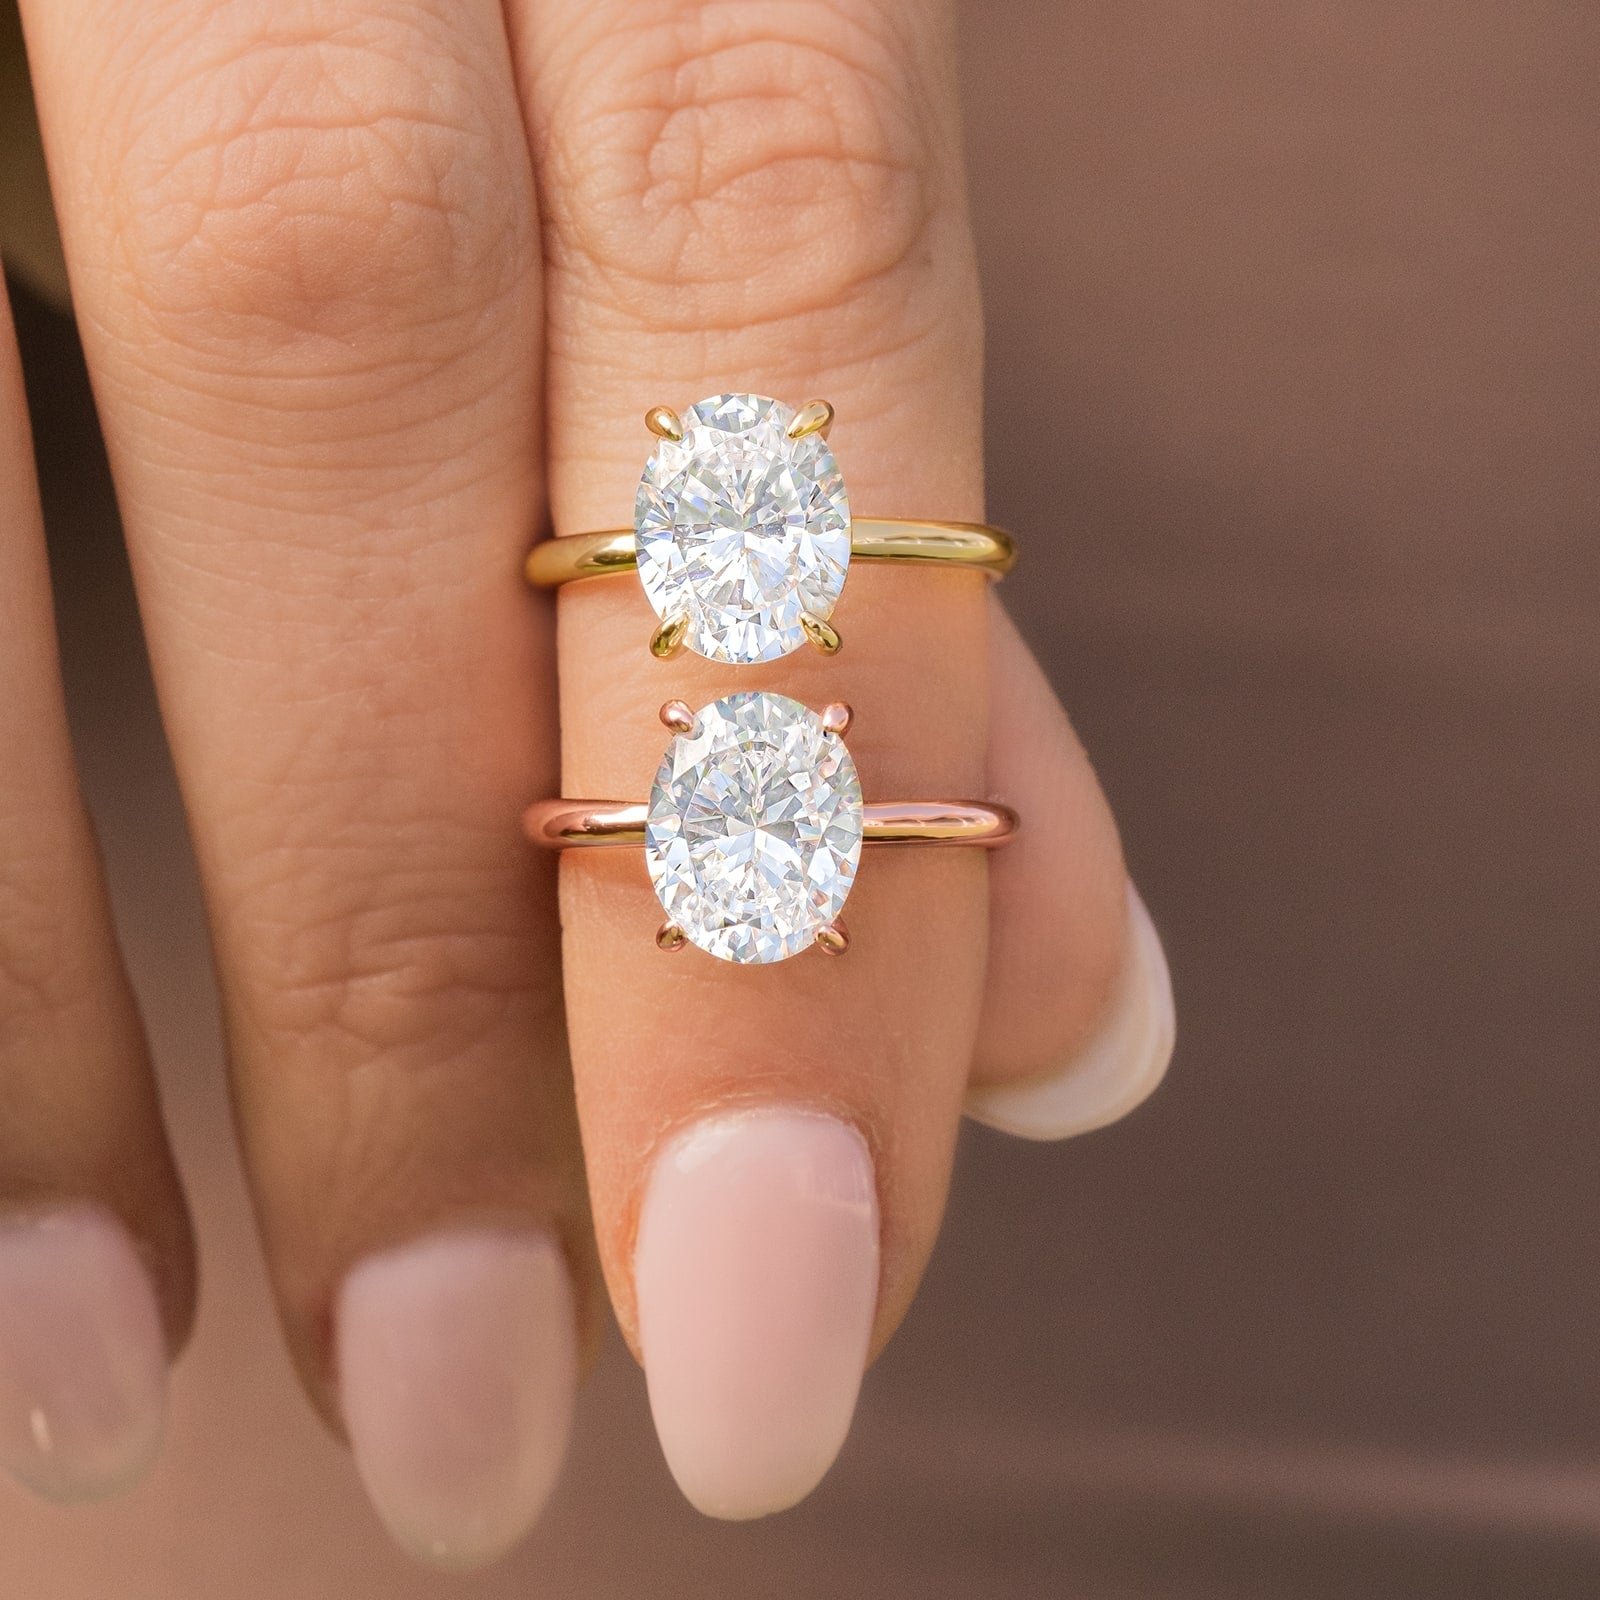 Buy diamond jewellery of latest designs for best price | Kalyan Jewellers